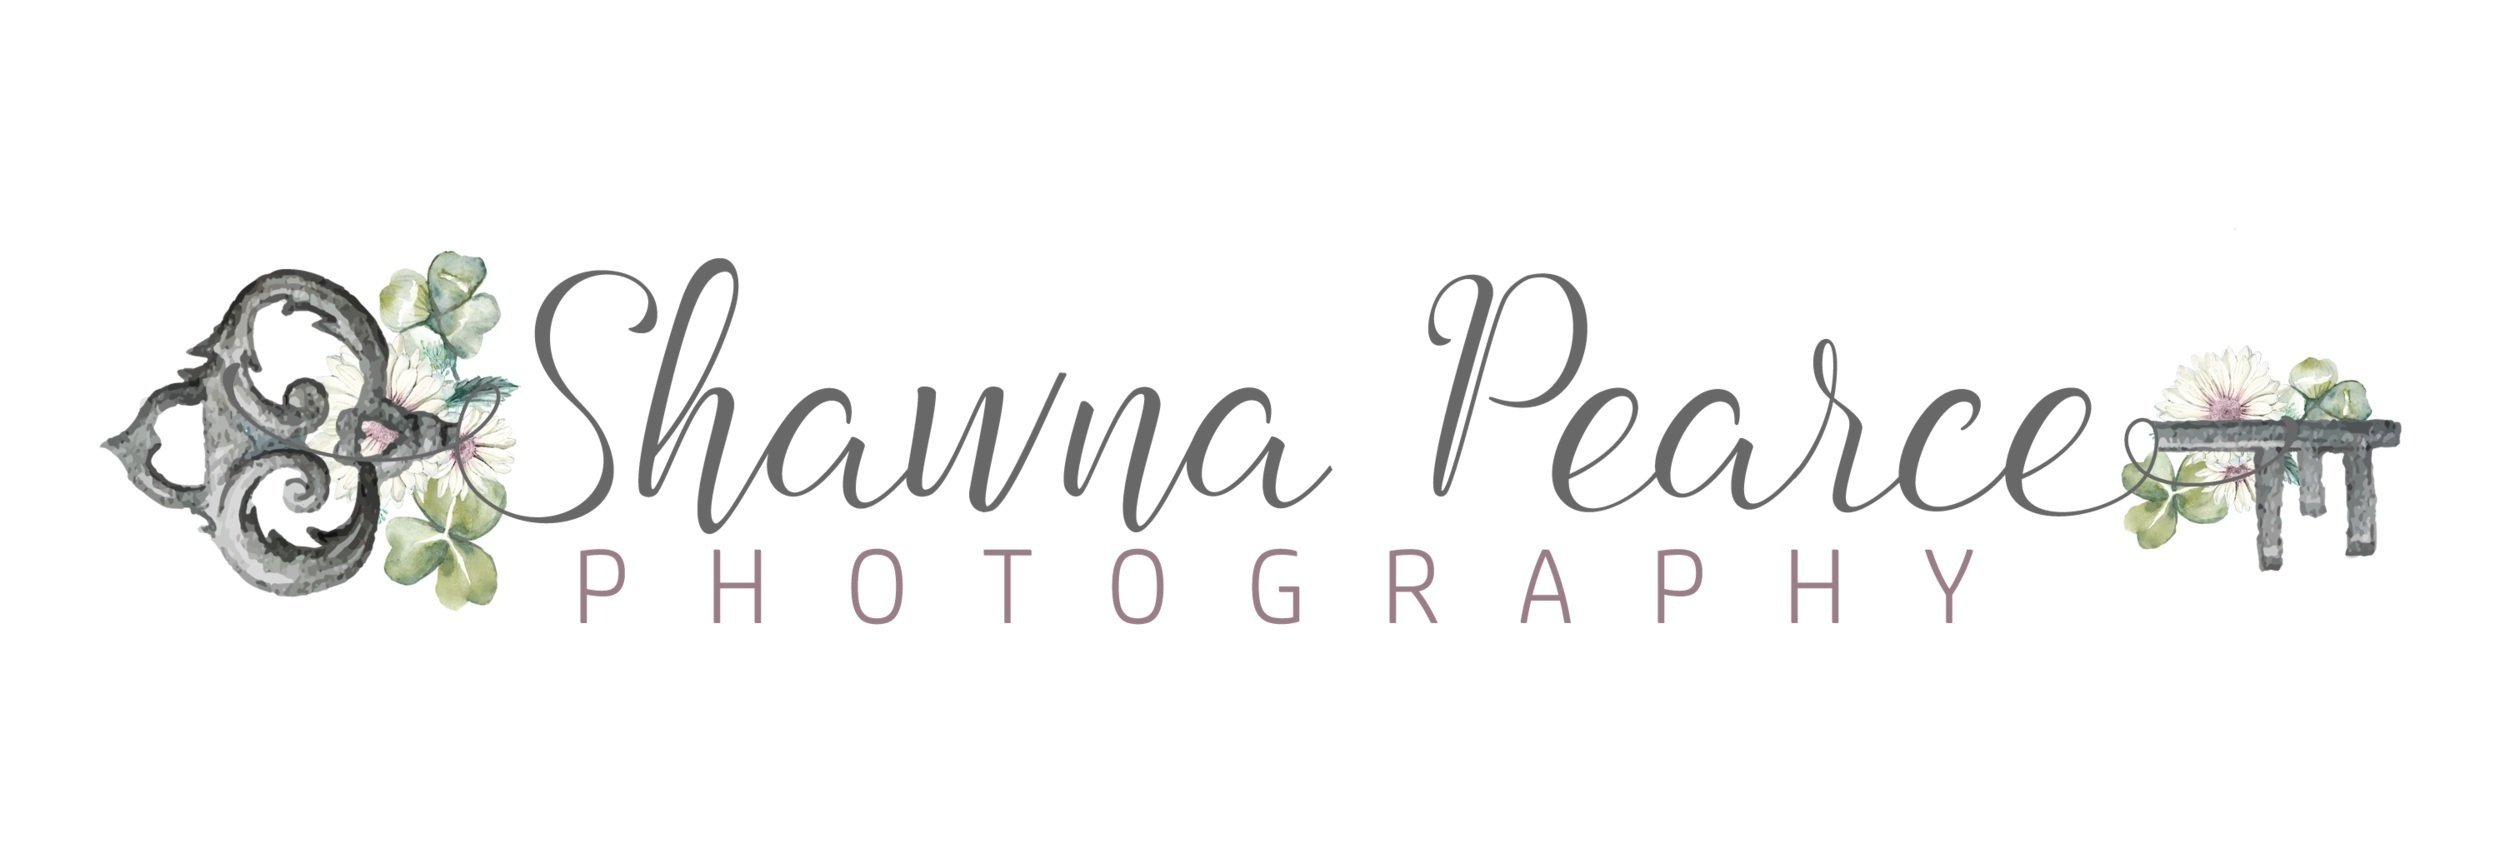 Shawna Pearce Photography